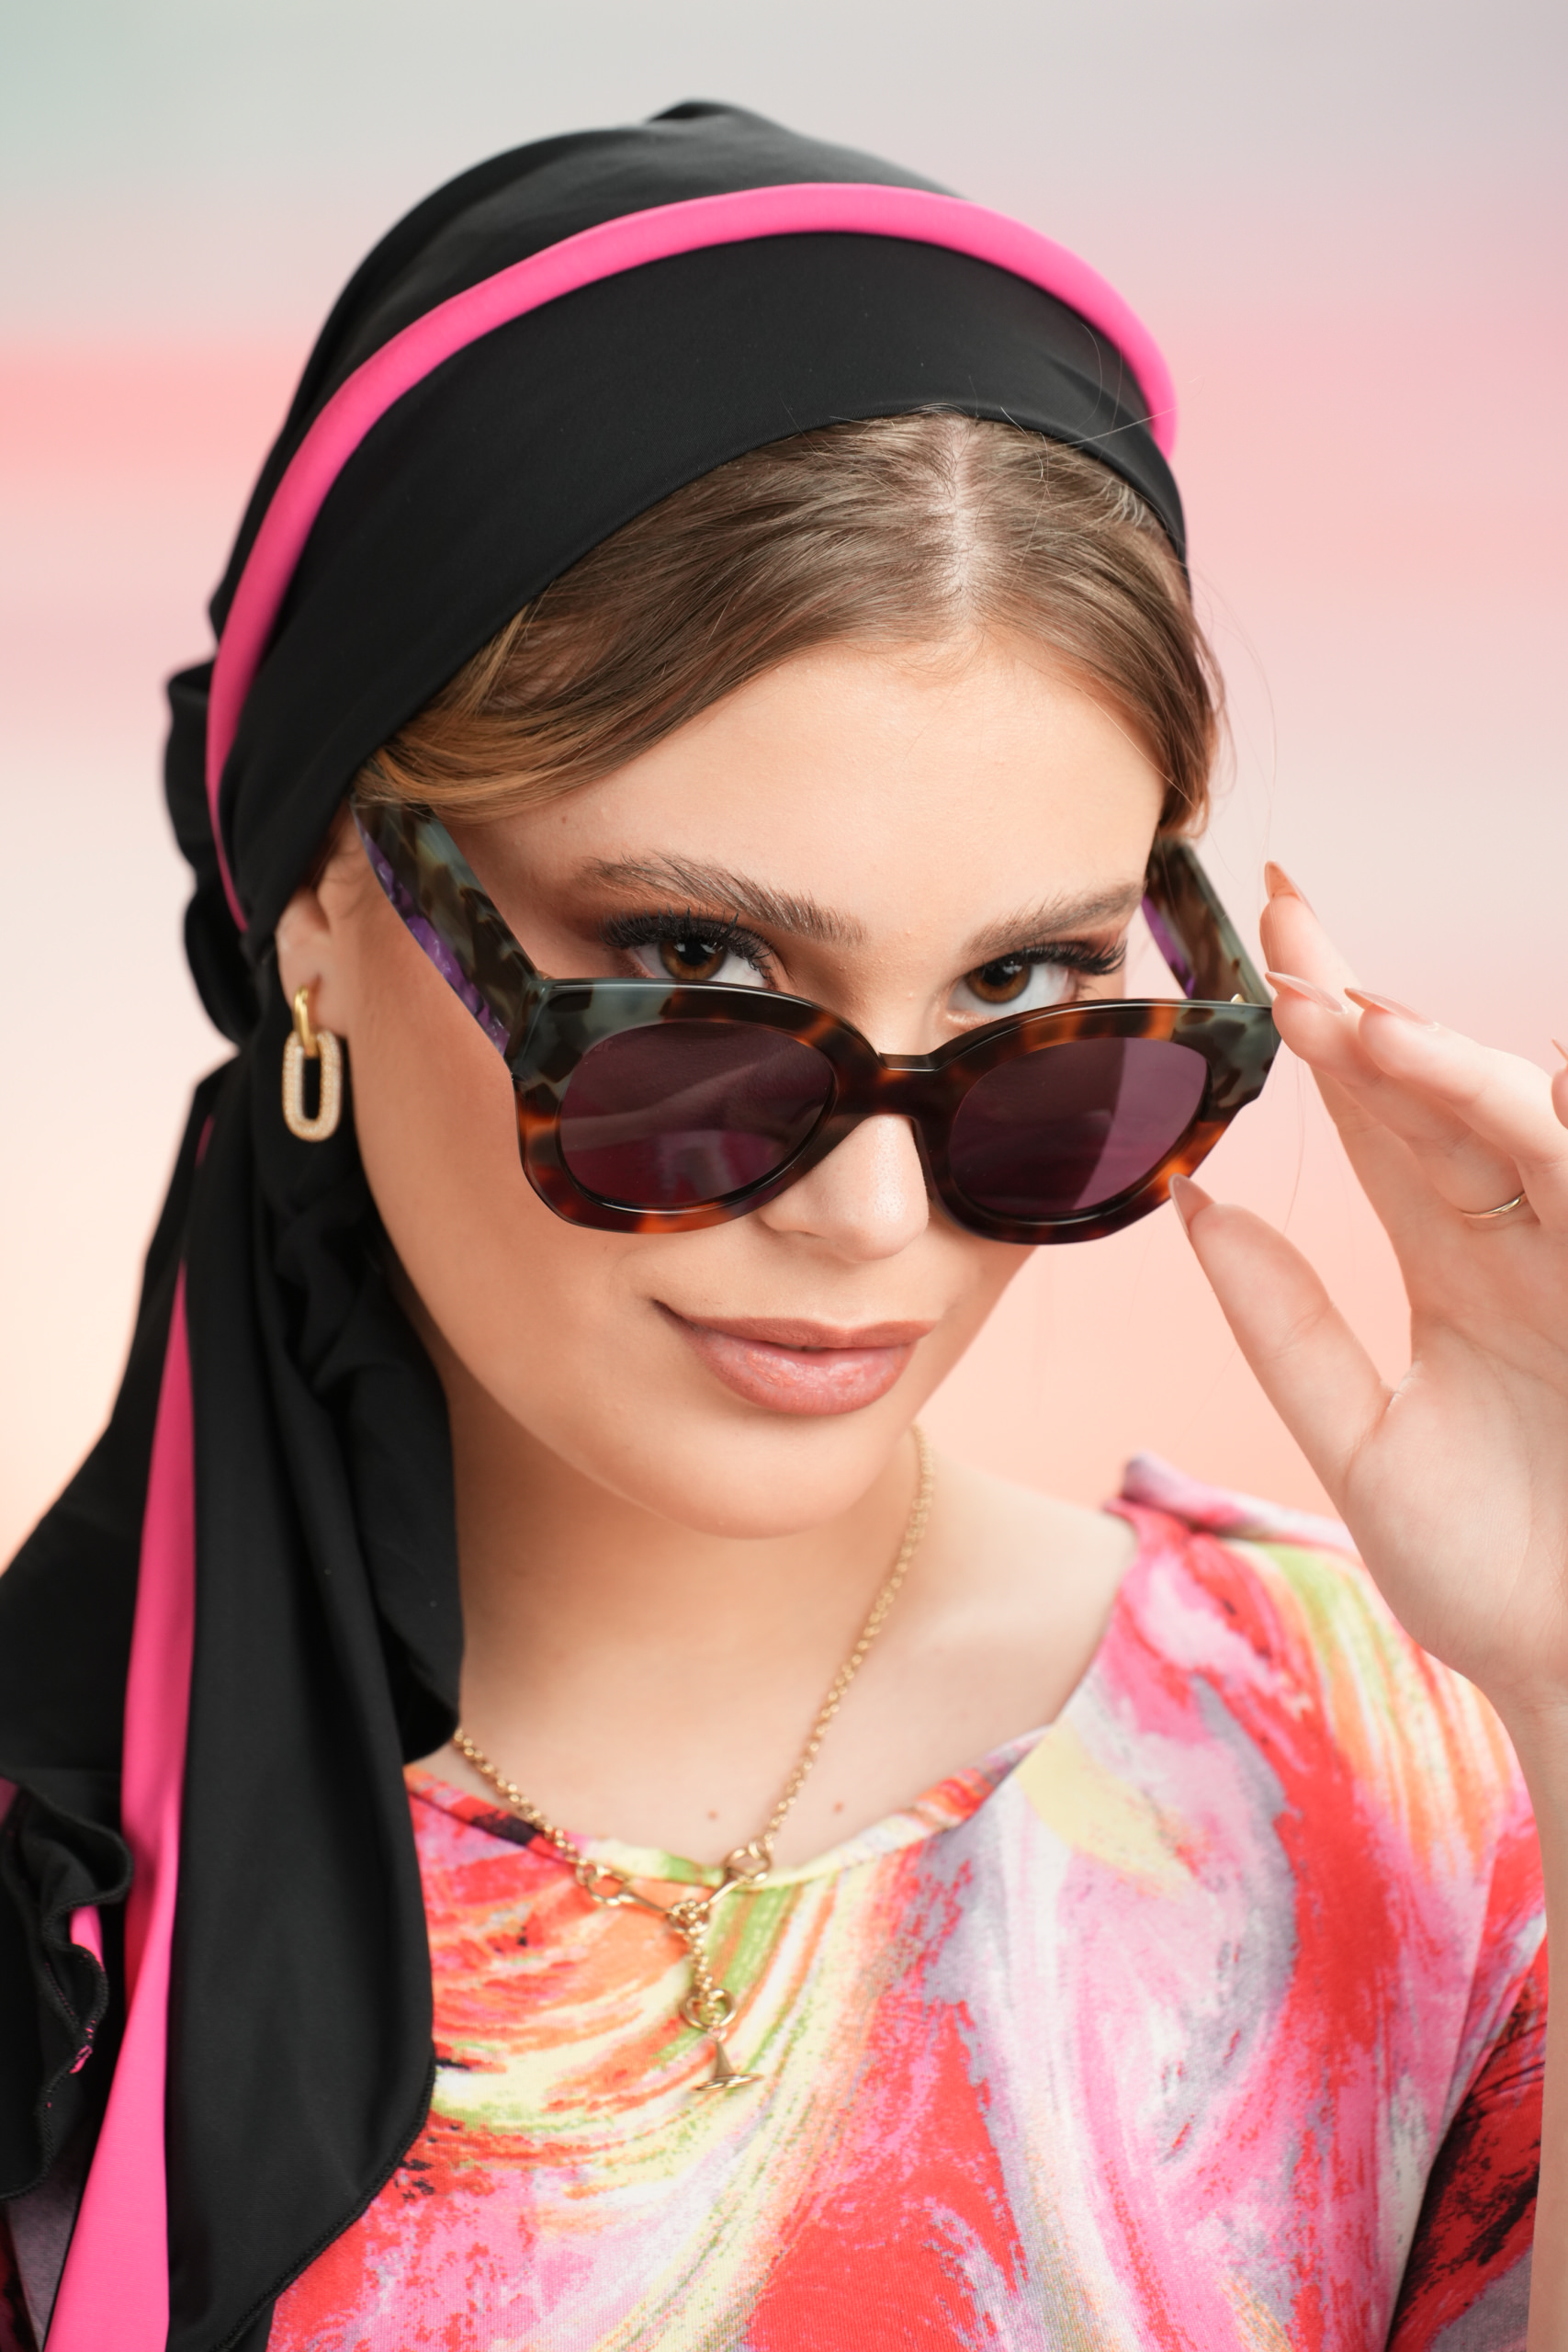 Beach Headscarf with black base & pink fuchsia headband